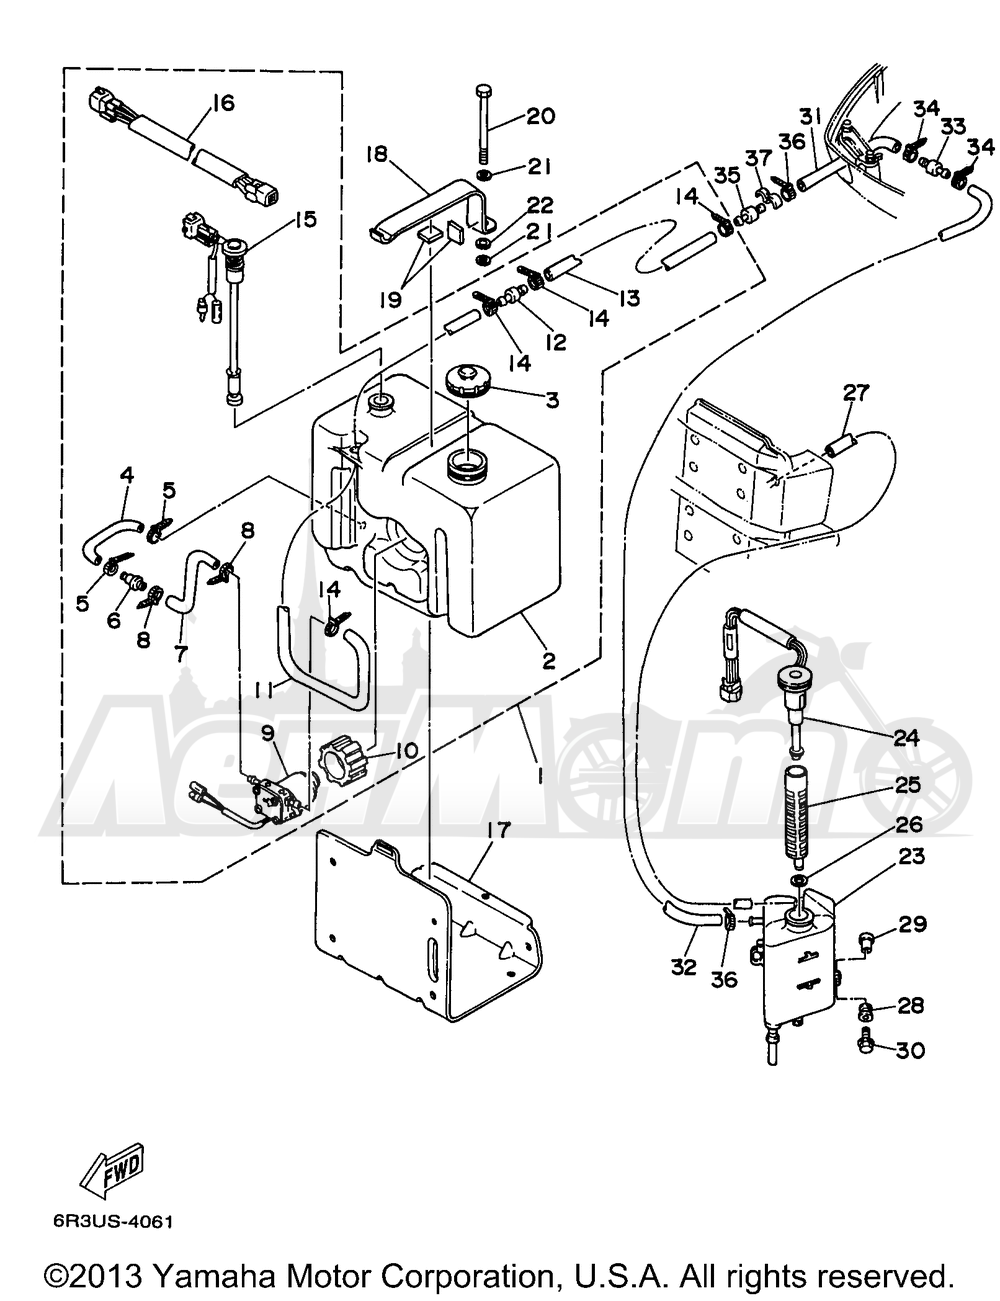 Запчасти для Лодочного мотора Yamaha 1997 225TLRV Раздел: OIL TANK | маслобак